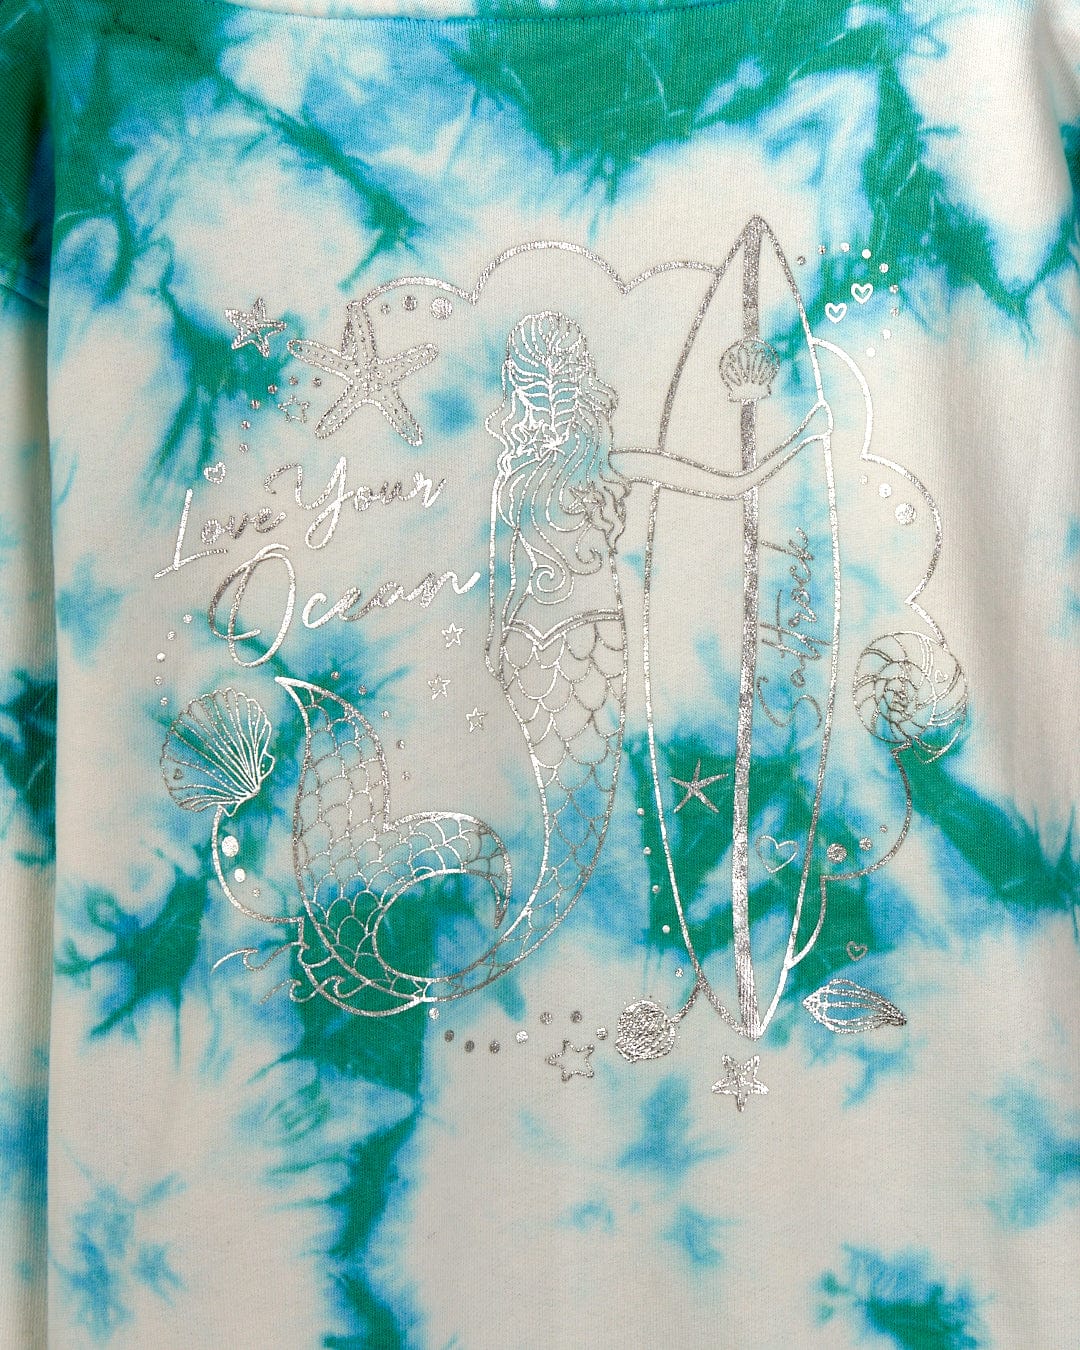 Mermaid Surf - Kids Tie Dye Pop Hoodie - Turquoise/White from Saltrock, including the phrase "Love Your Ocean" in decorative script.